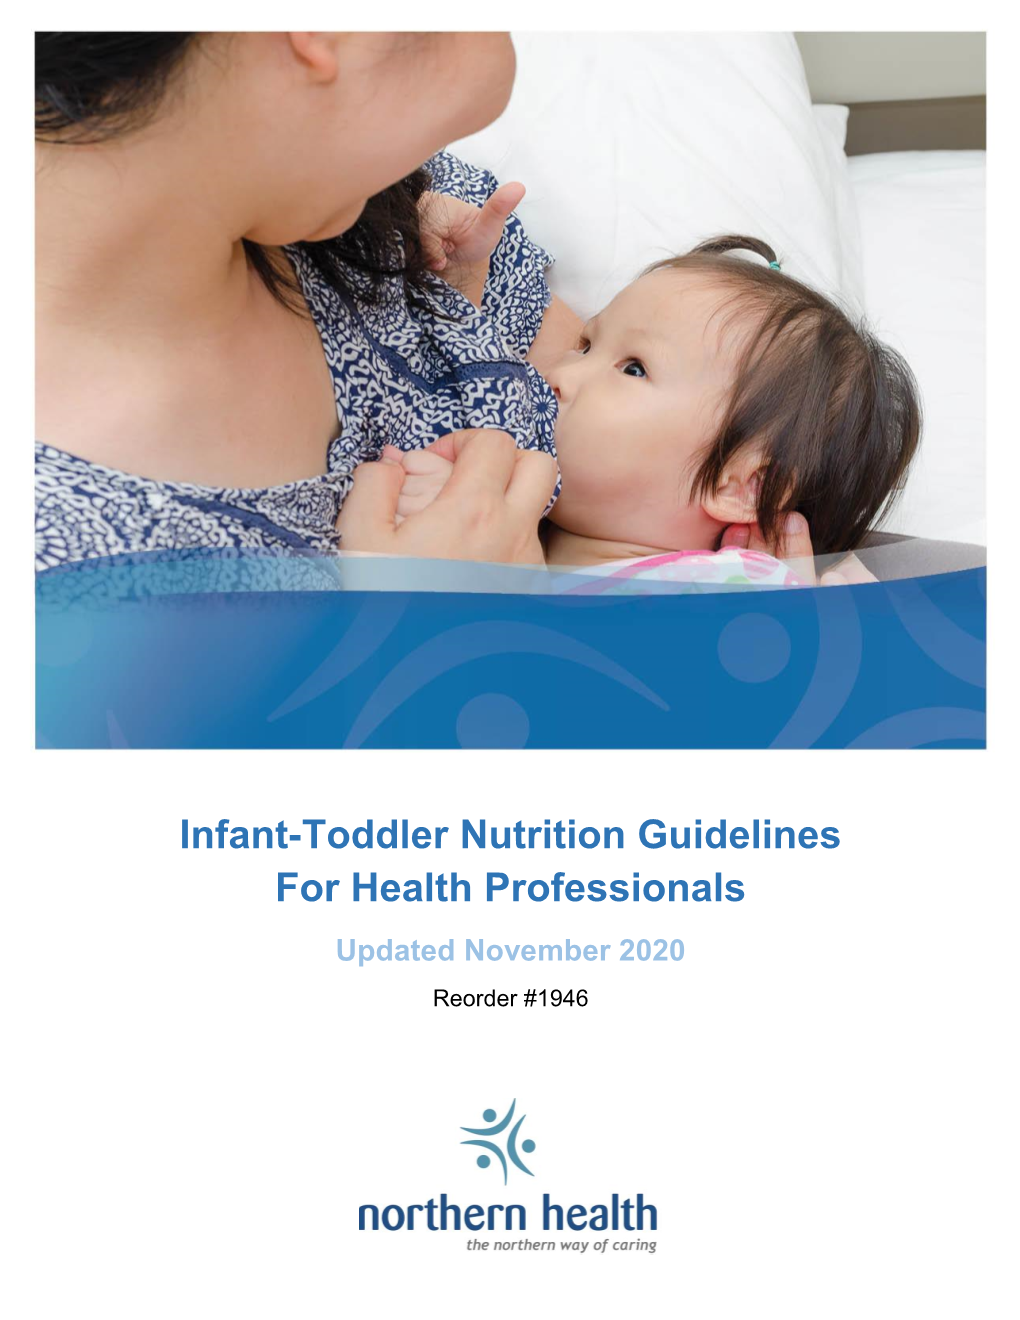 Infant-Toddler Nutrition Guidelines for Health Professionals Updated November 2020 Reorder #1946